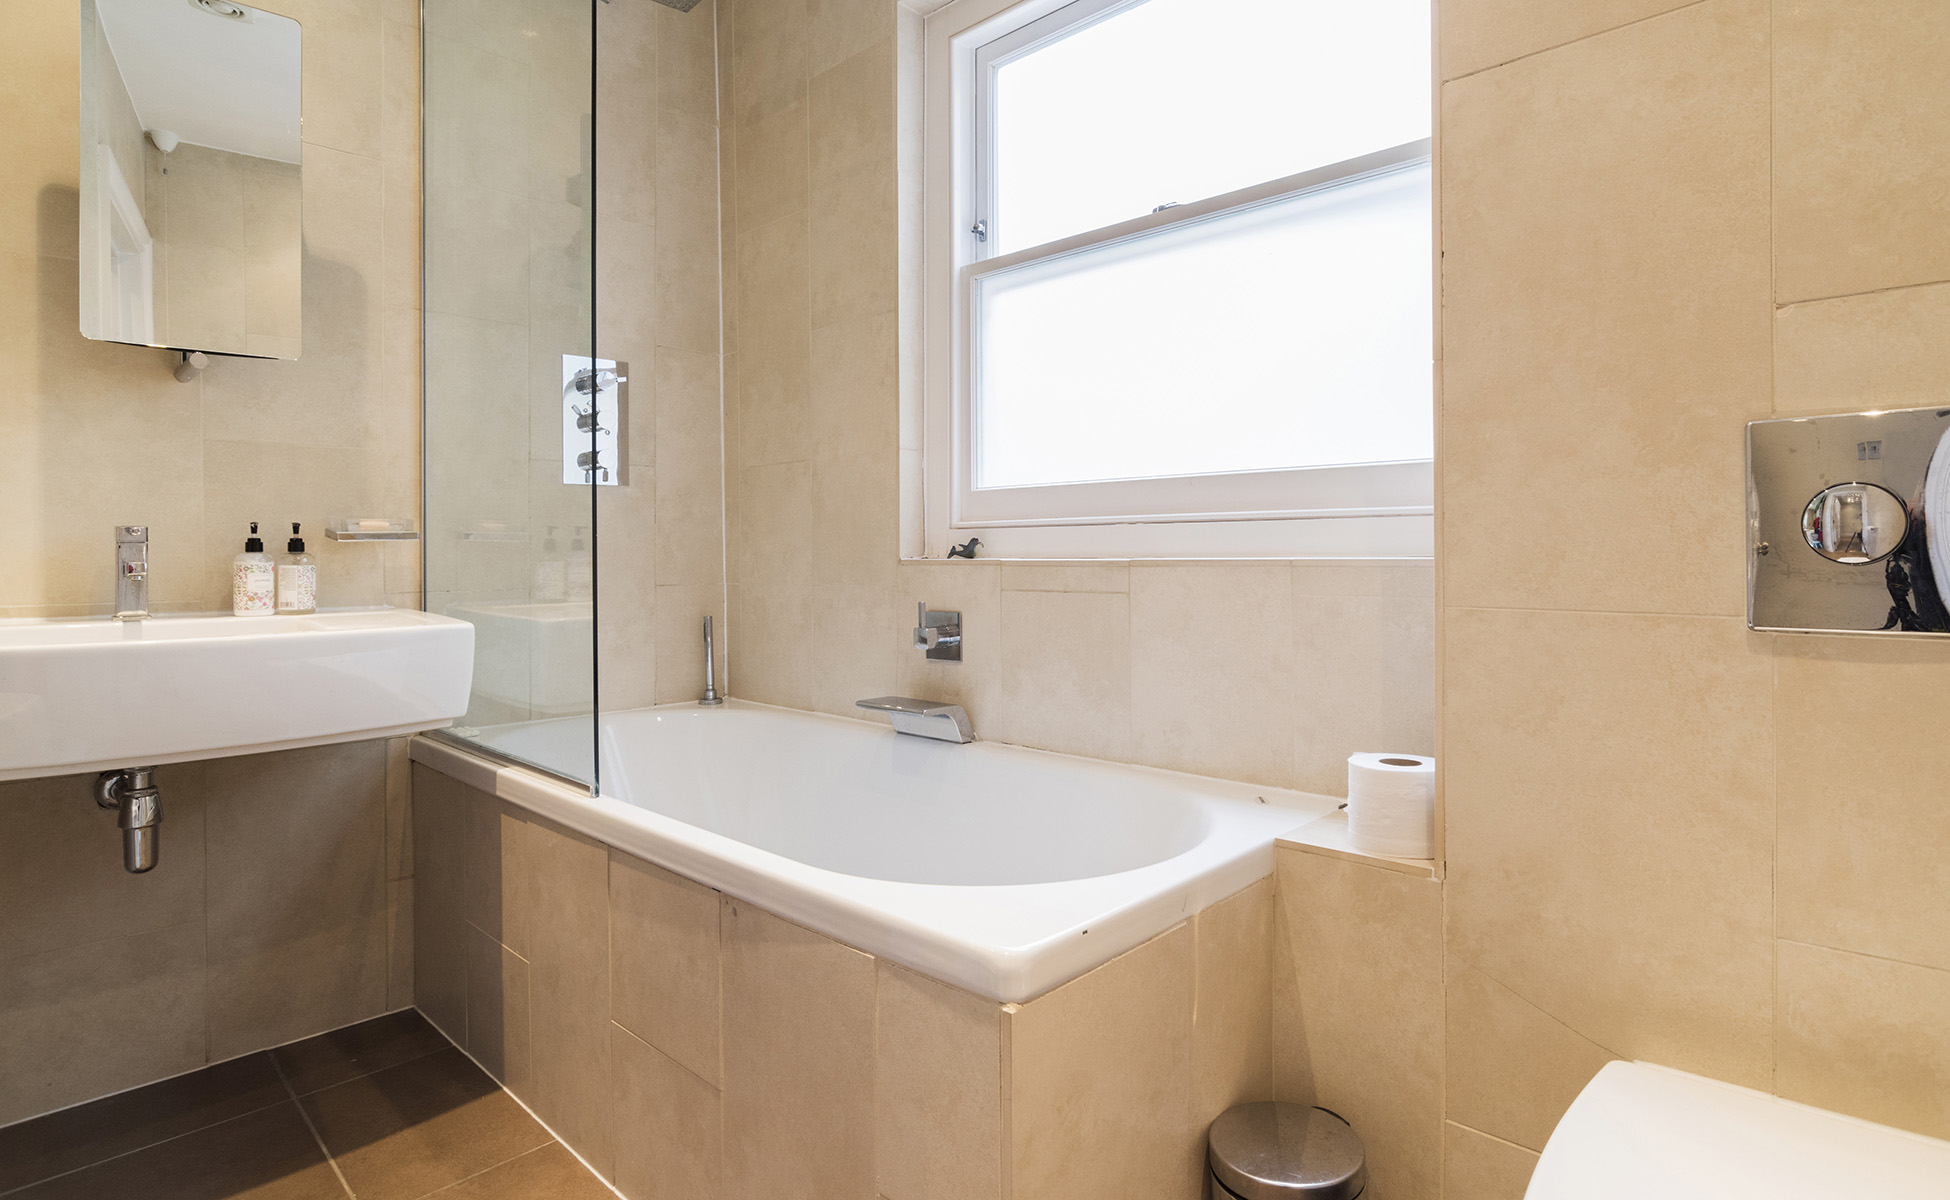 Lovelydays luxury service apartment rental - London - Fulham - Gironde road - Lovelysuite - 4 bedrooms - 2 bathrooms - Beautiful bathtub - e10d7988290b - Lovelydays